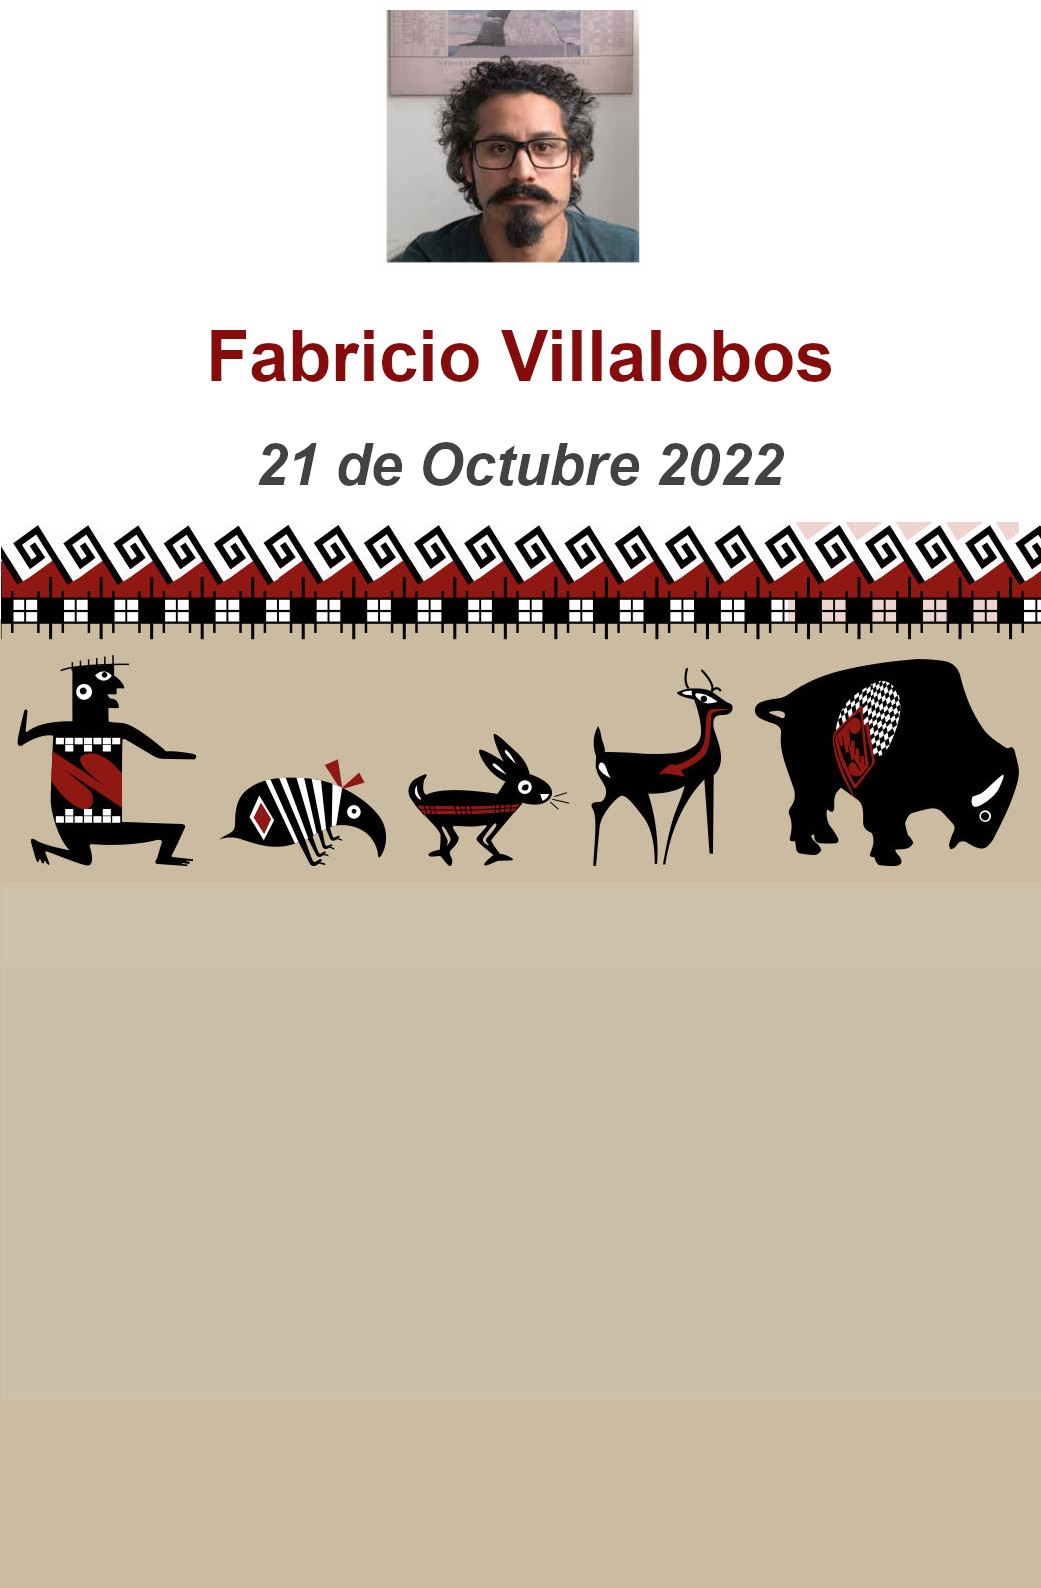 Fabricio Villalobos